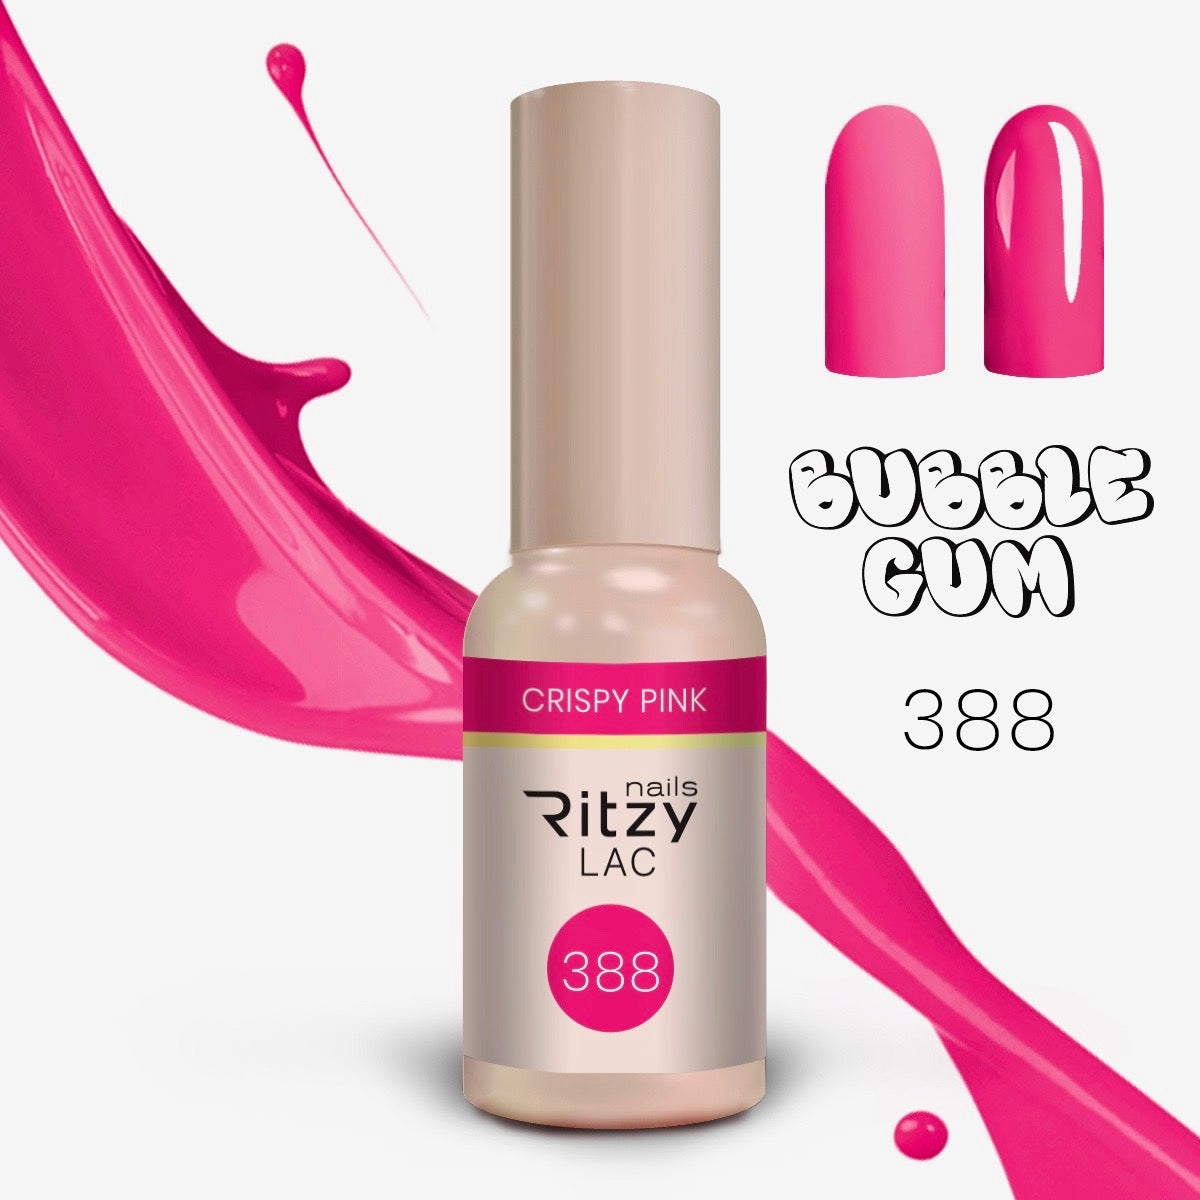 Ritzy Lac Crispy Pink 388